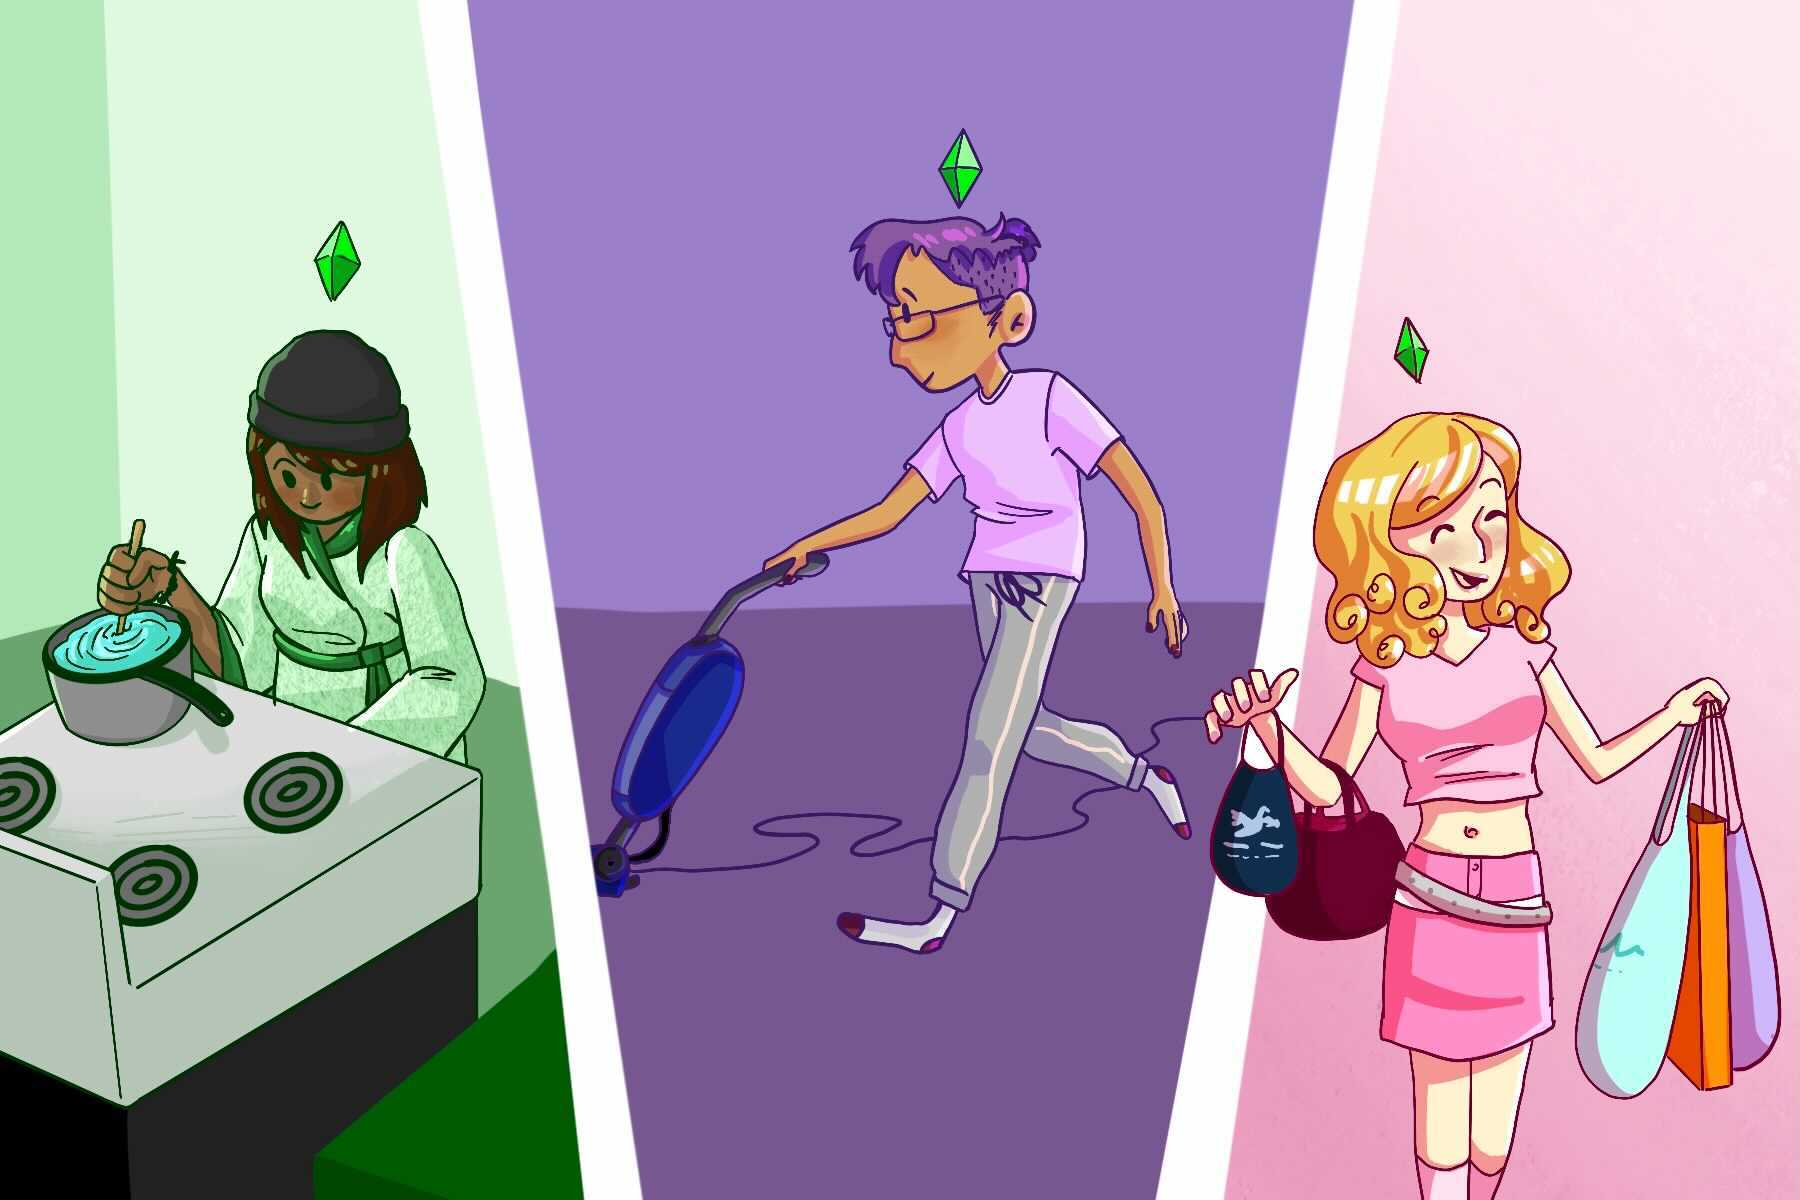 The Sims glorifies the menial tasks of everyday life